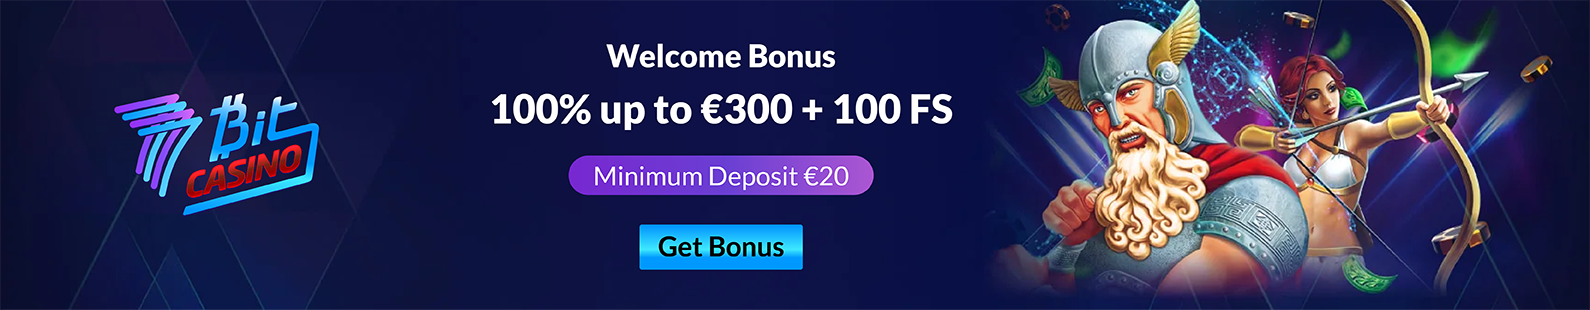 7BitCasino Welcome Bonus of €300 - Big